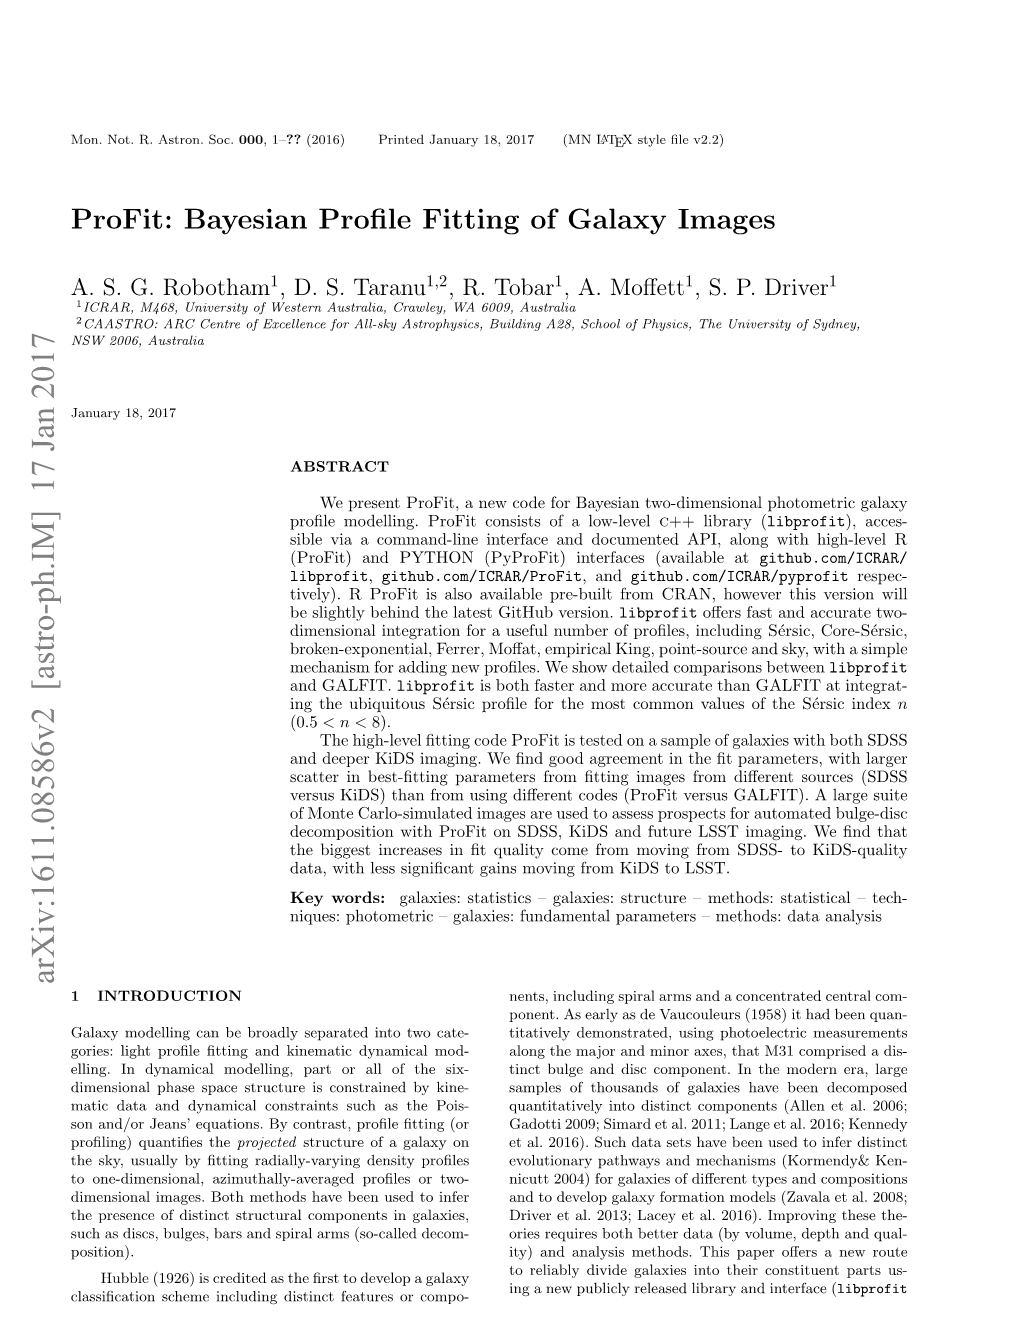 Profit: Bayesian Profile Fitting of Galaxy Images